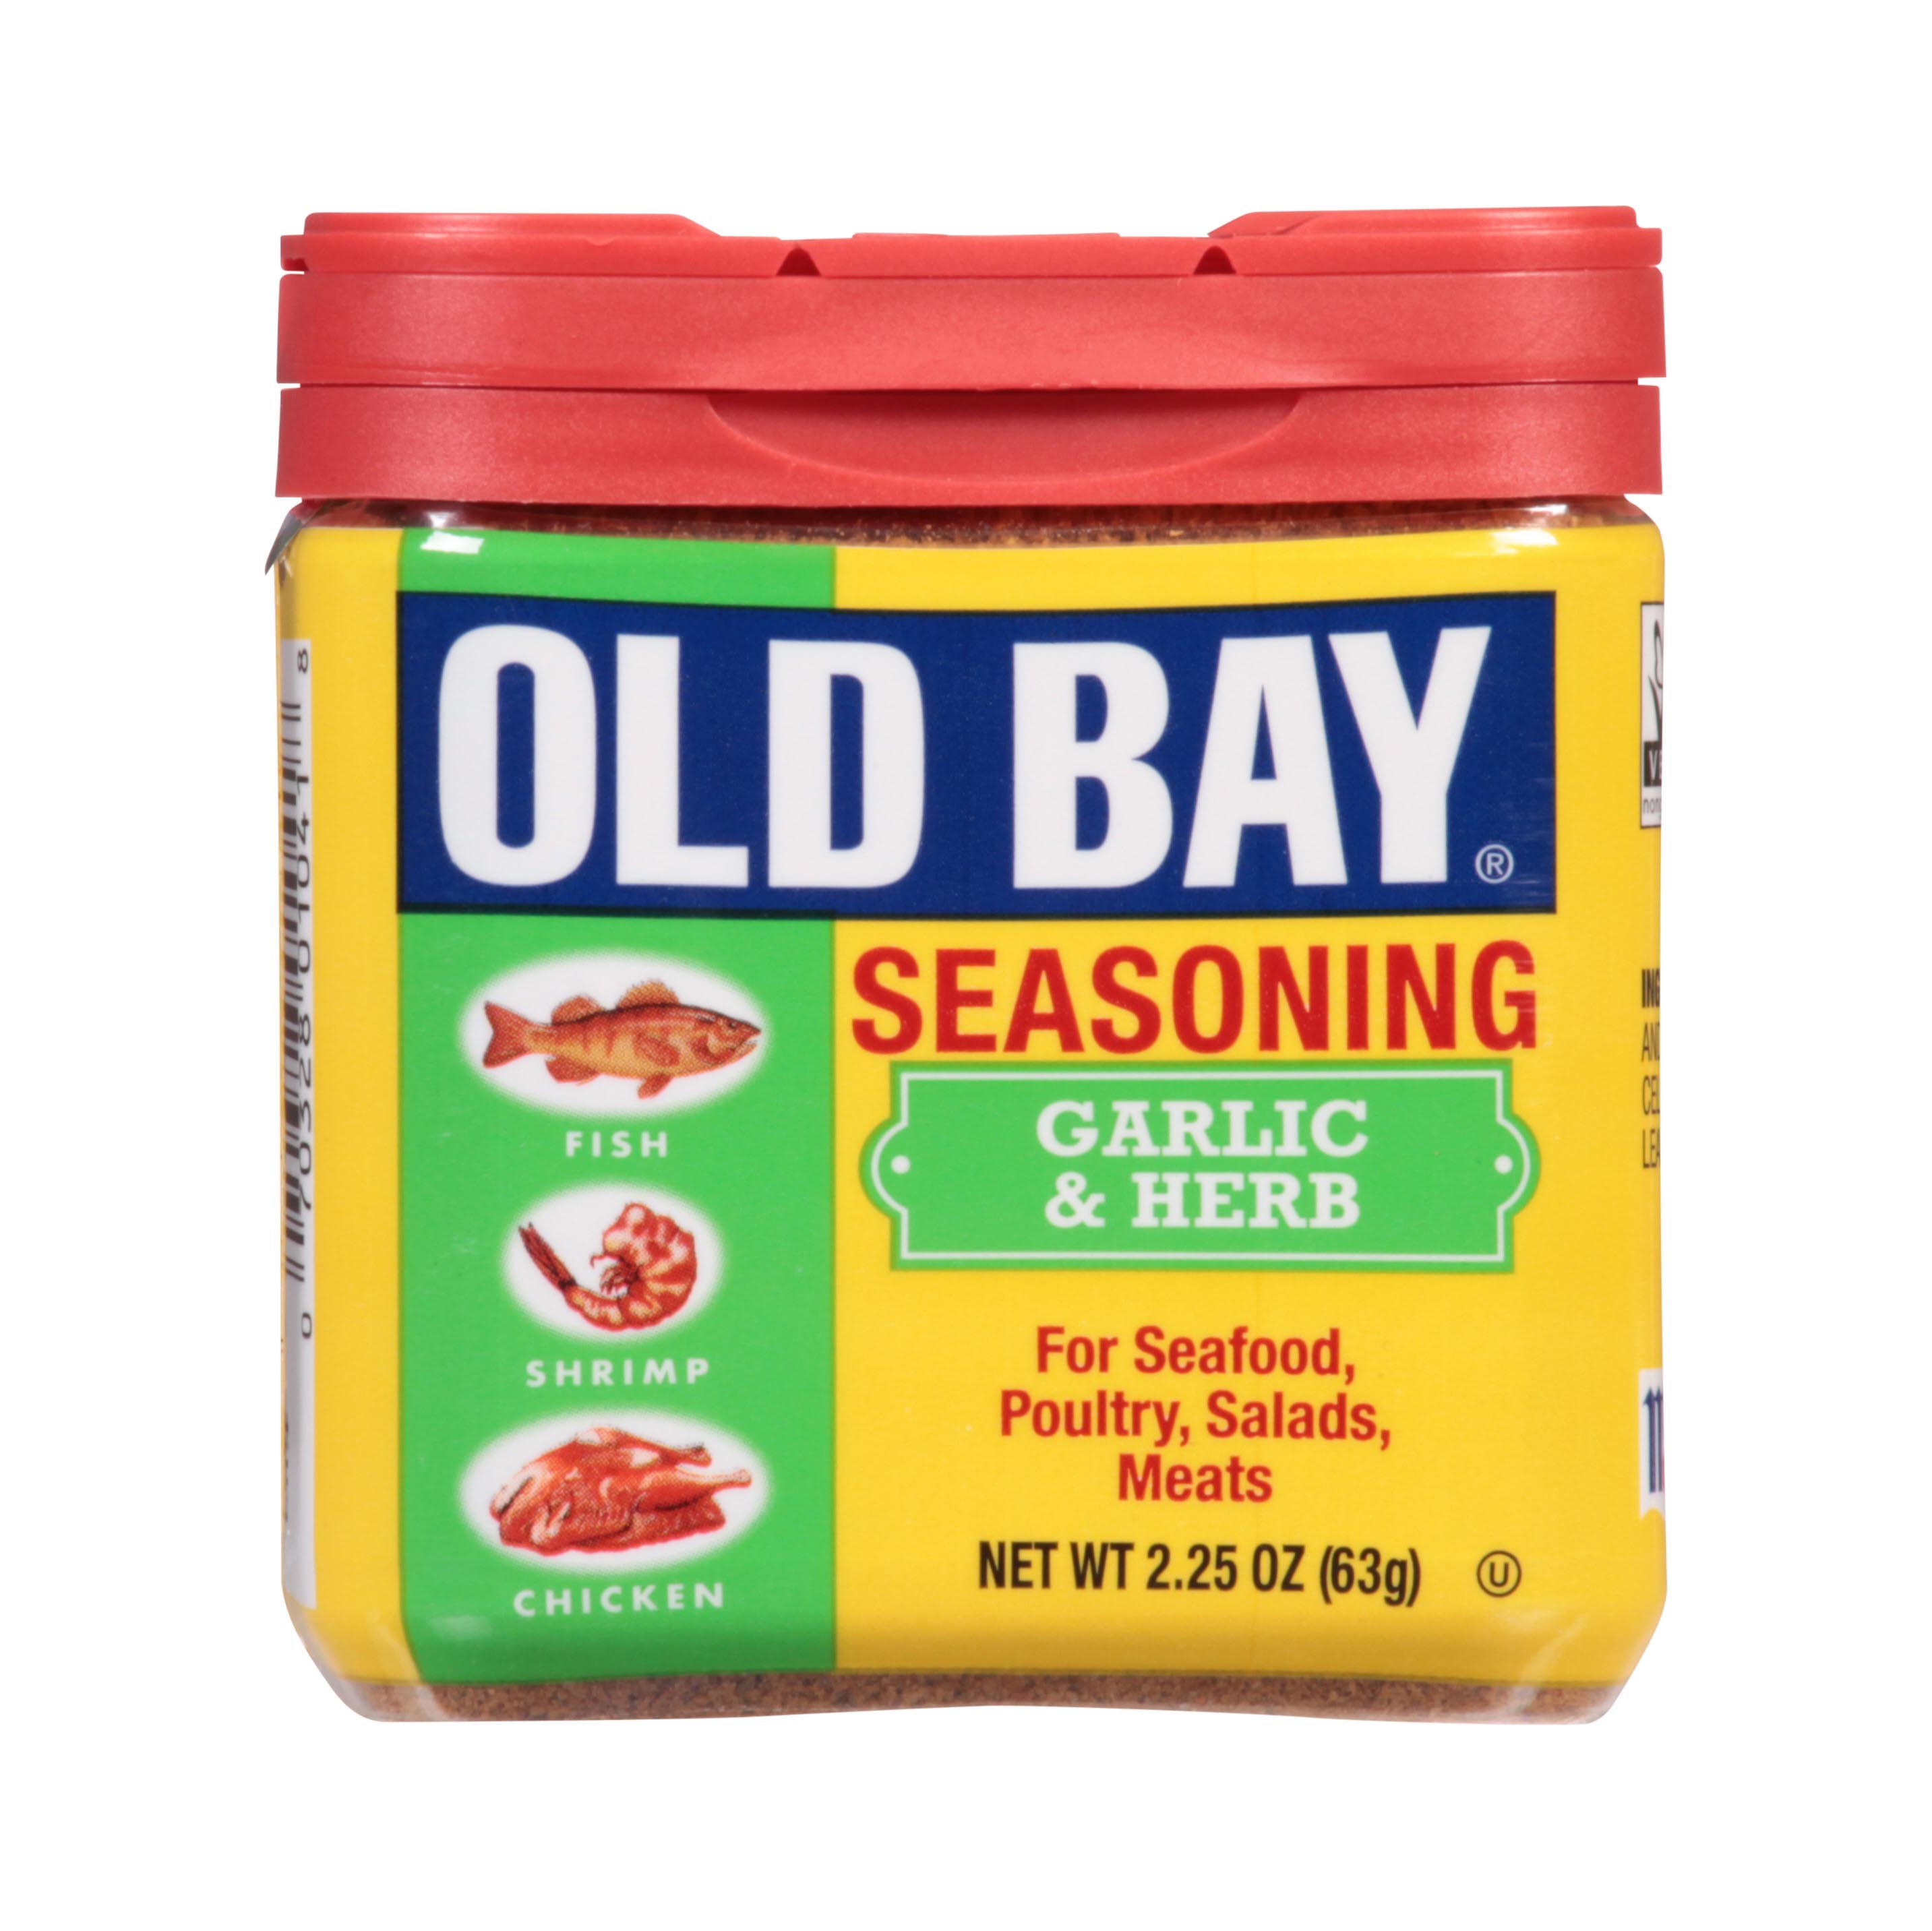 Coastal Bay Seafood Seasoning Medium Jar (Net: 2.4 oz)